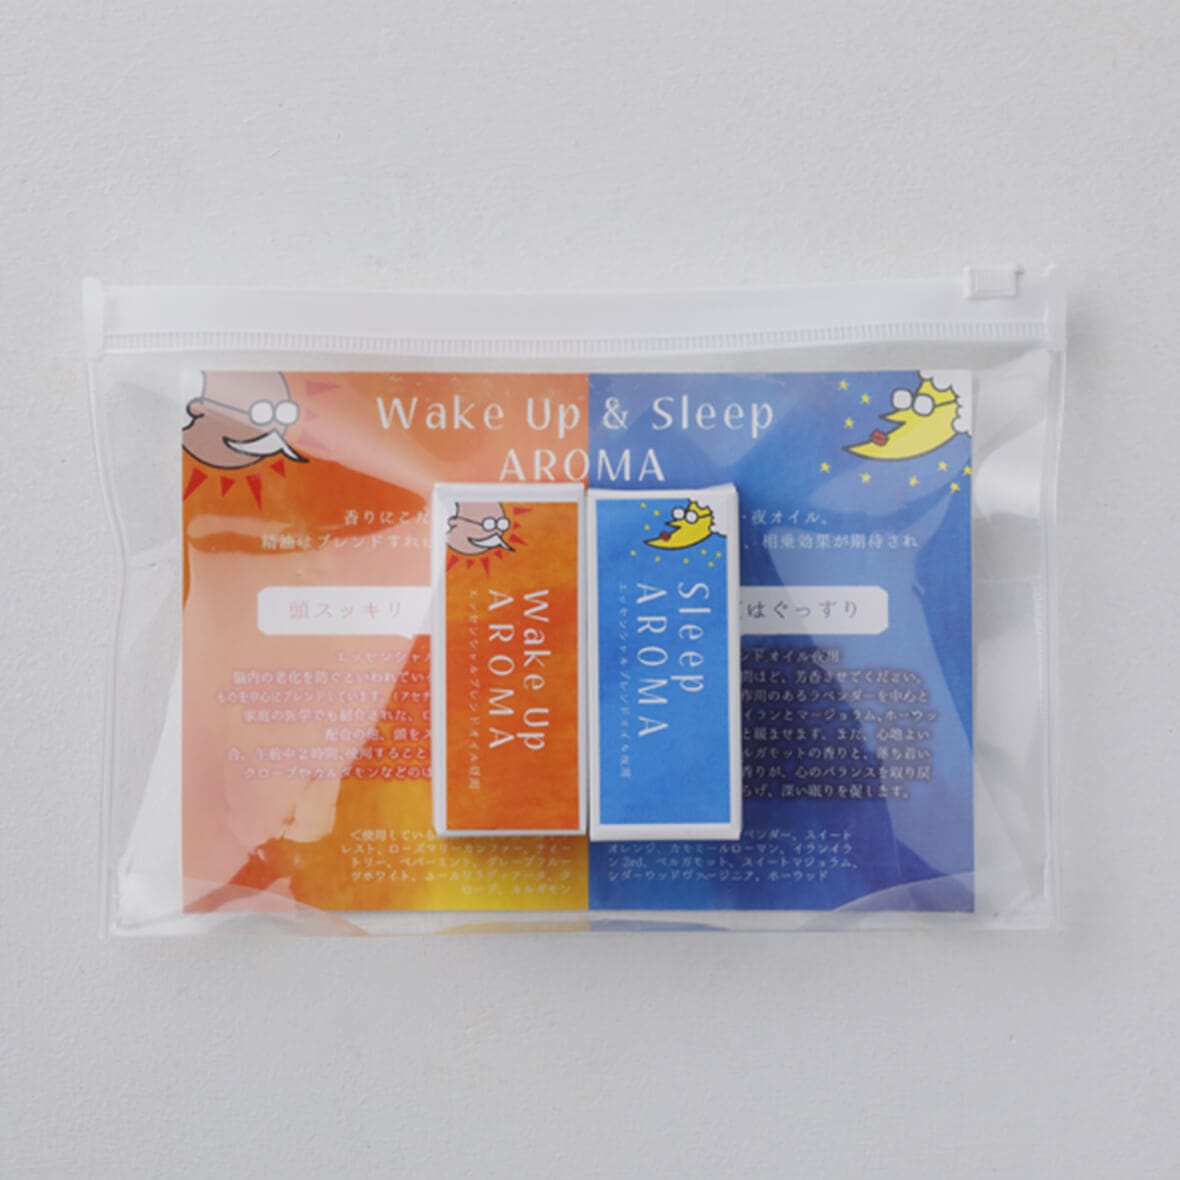 WakeUp & Sleep Aroma 2本セット